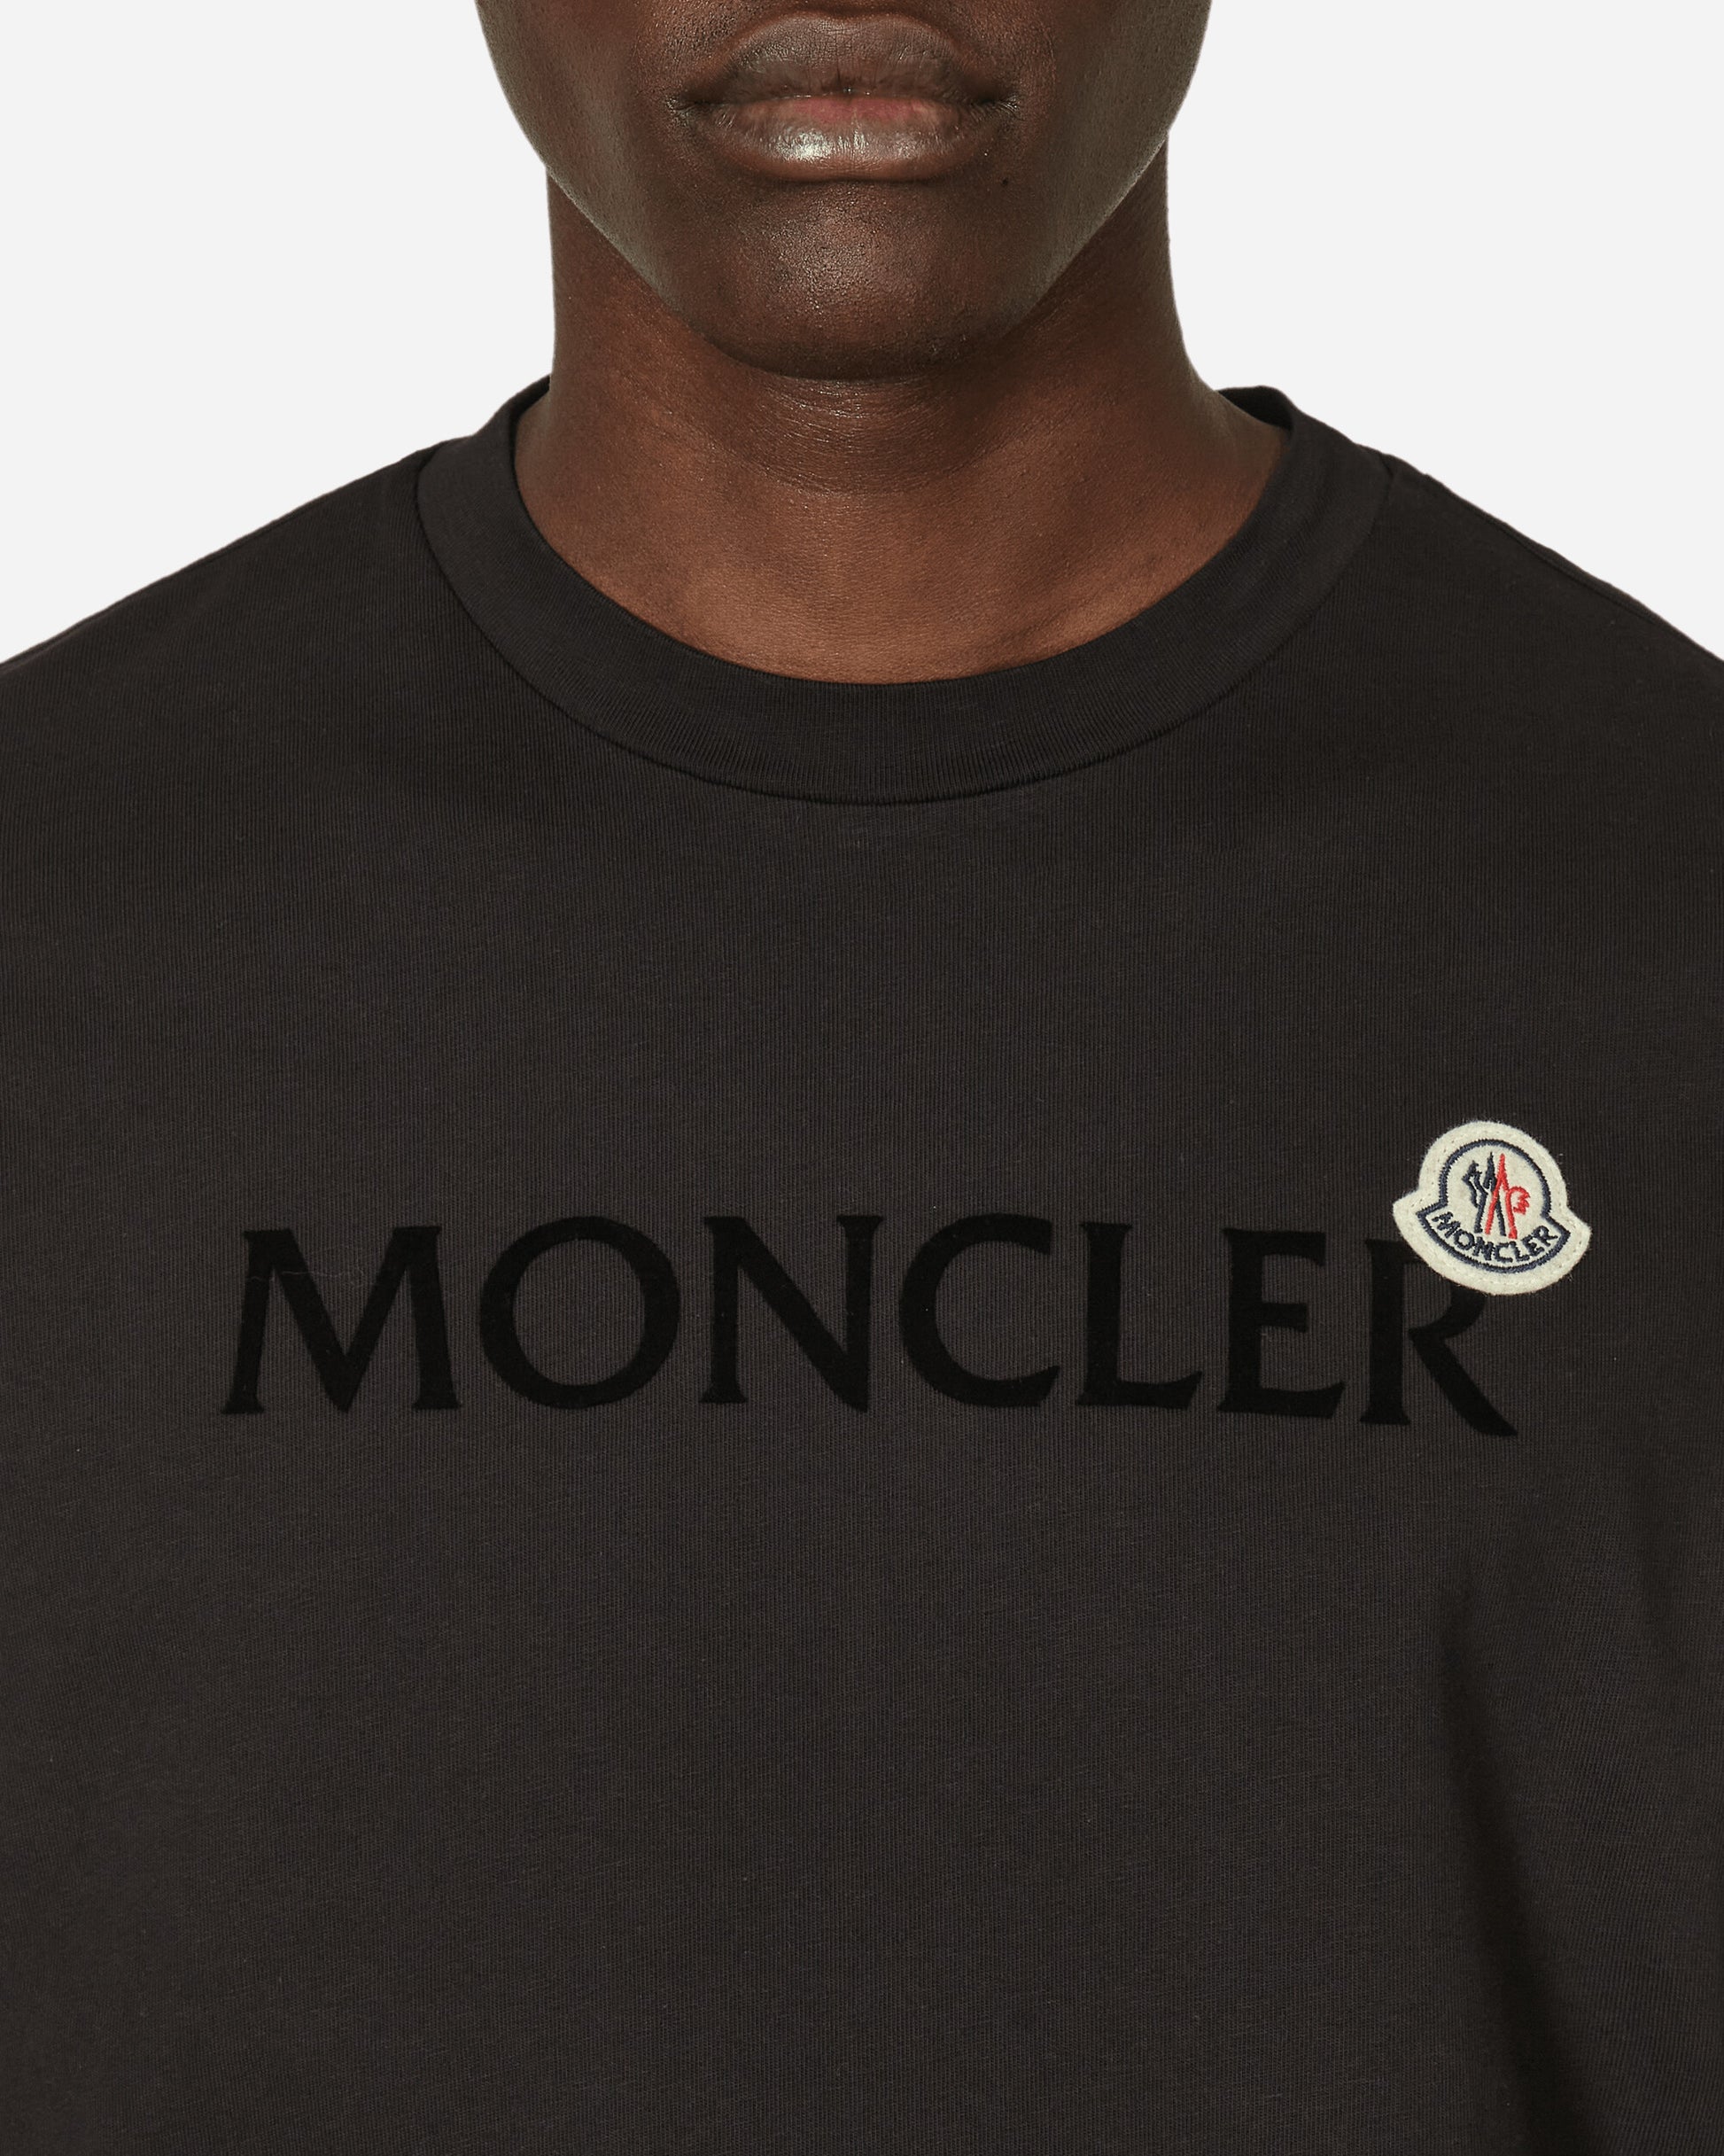 Moncler Ss T-Shirt Black T-Shirts Shortsleeve 8C000578390T 999